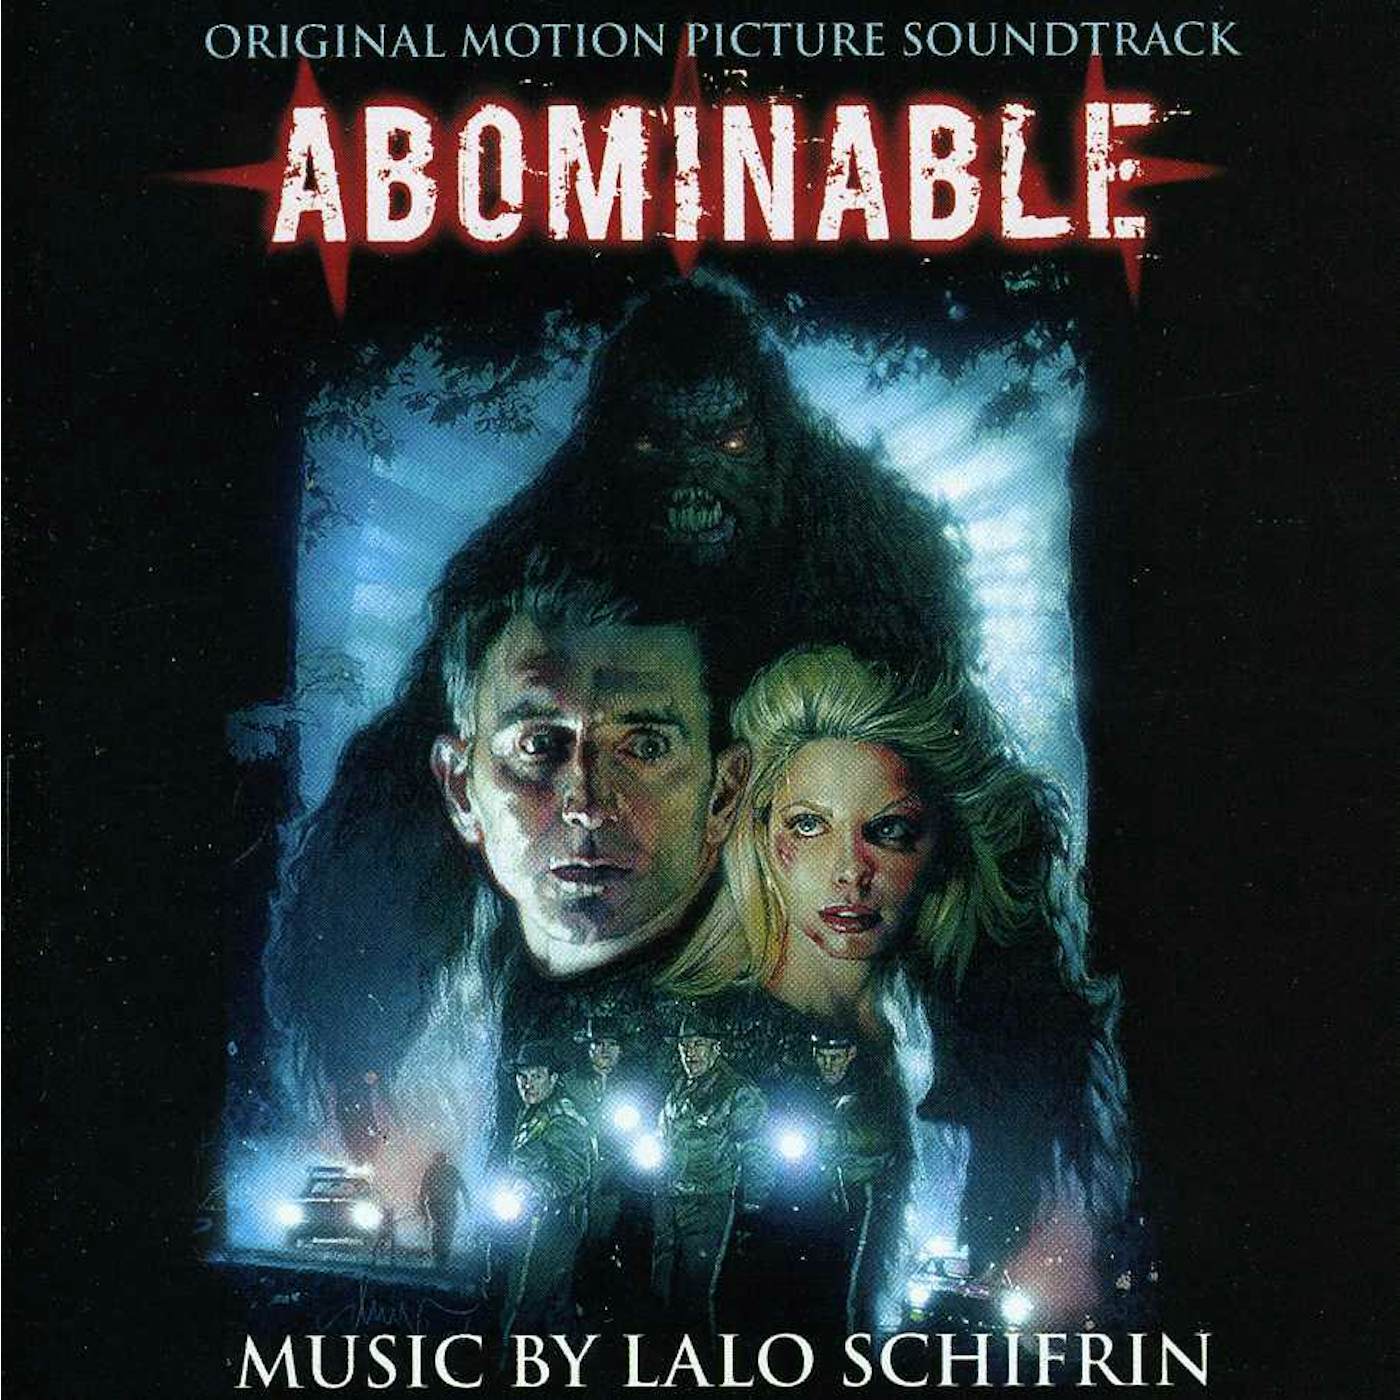 Lalo Schifrin ABOMINABLE / Original Soundtrack CD